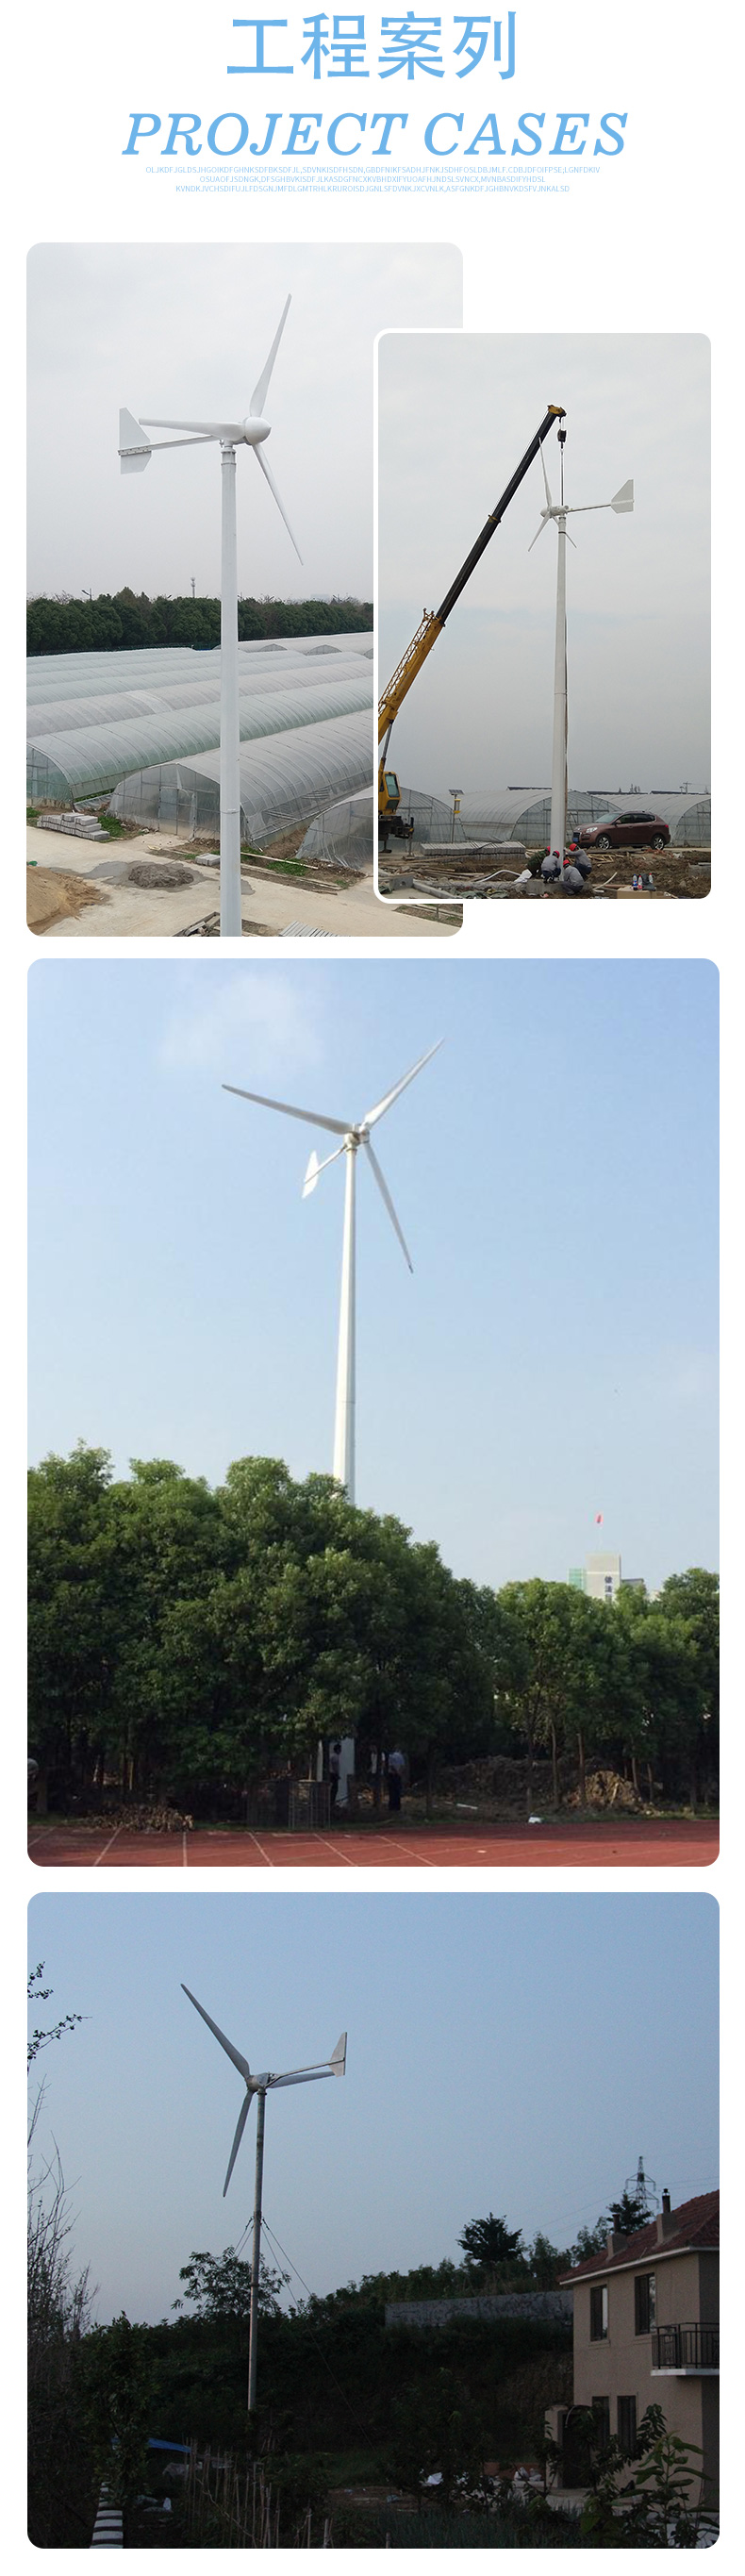 G型3-15KW风力发电机